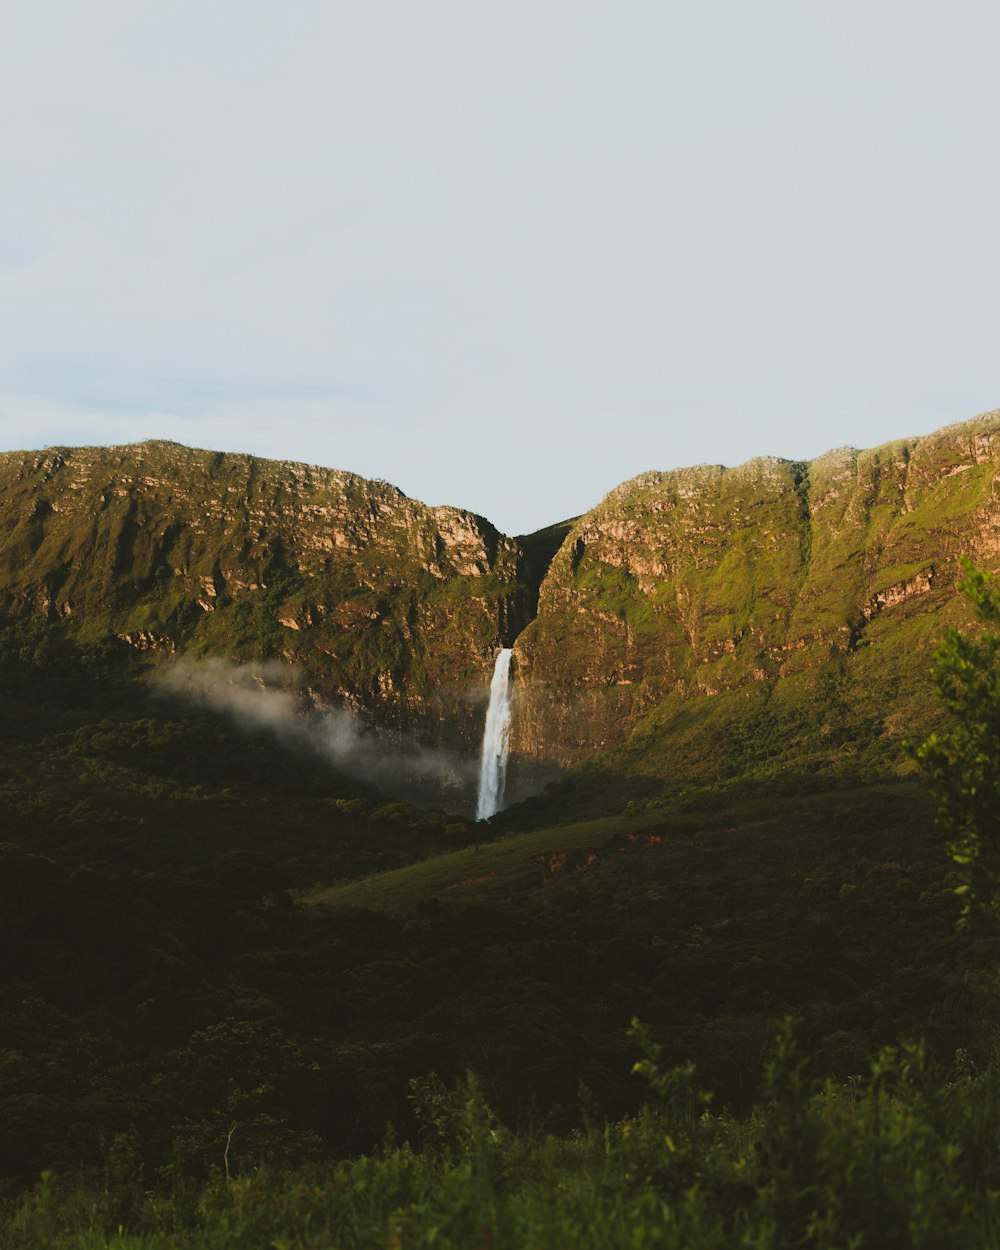 waterfalls on green grass field during daytime